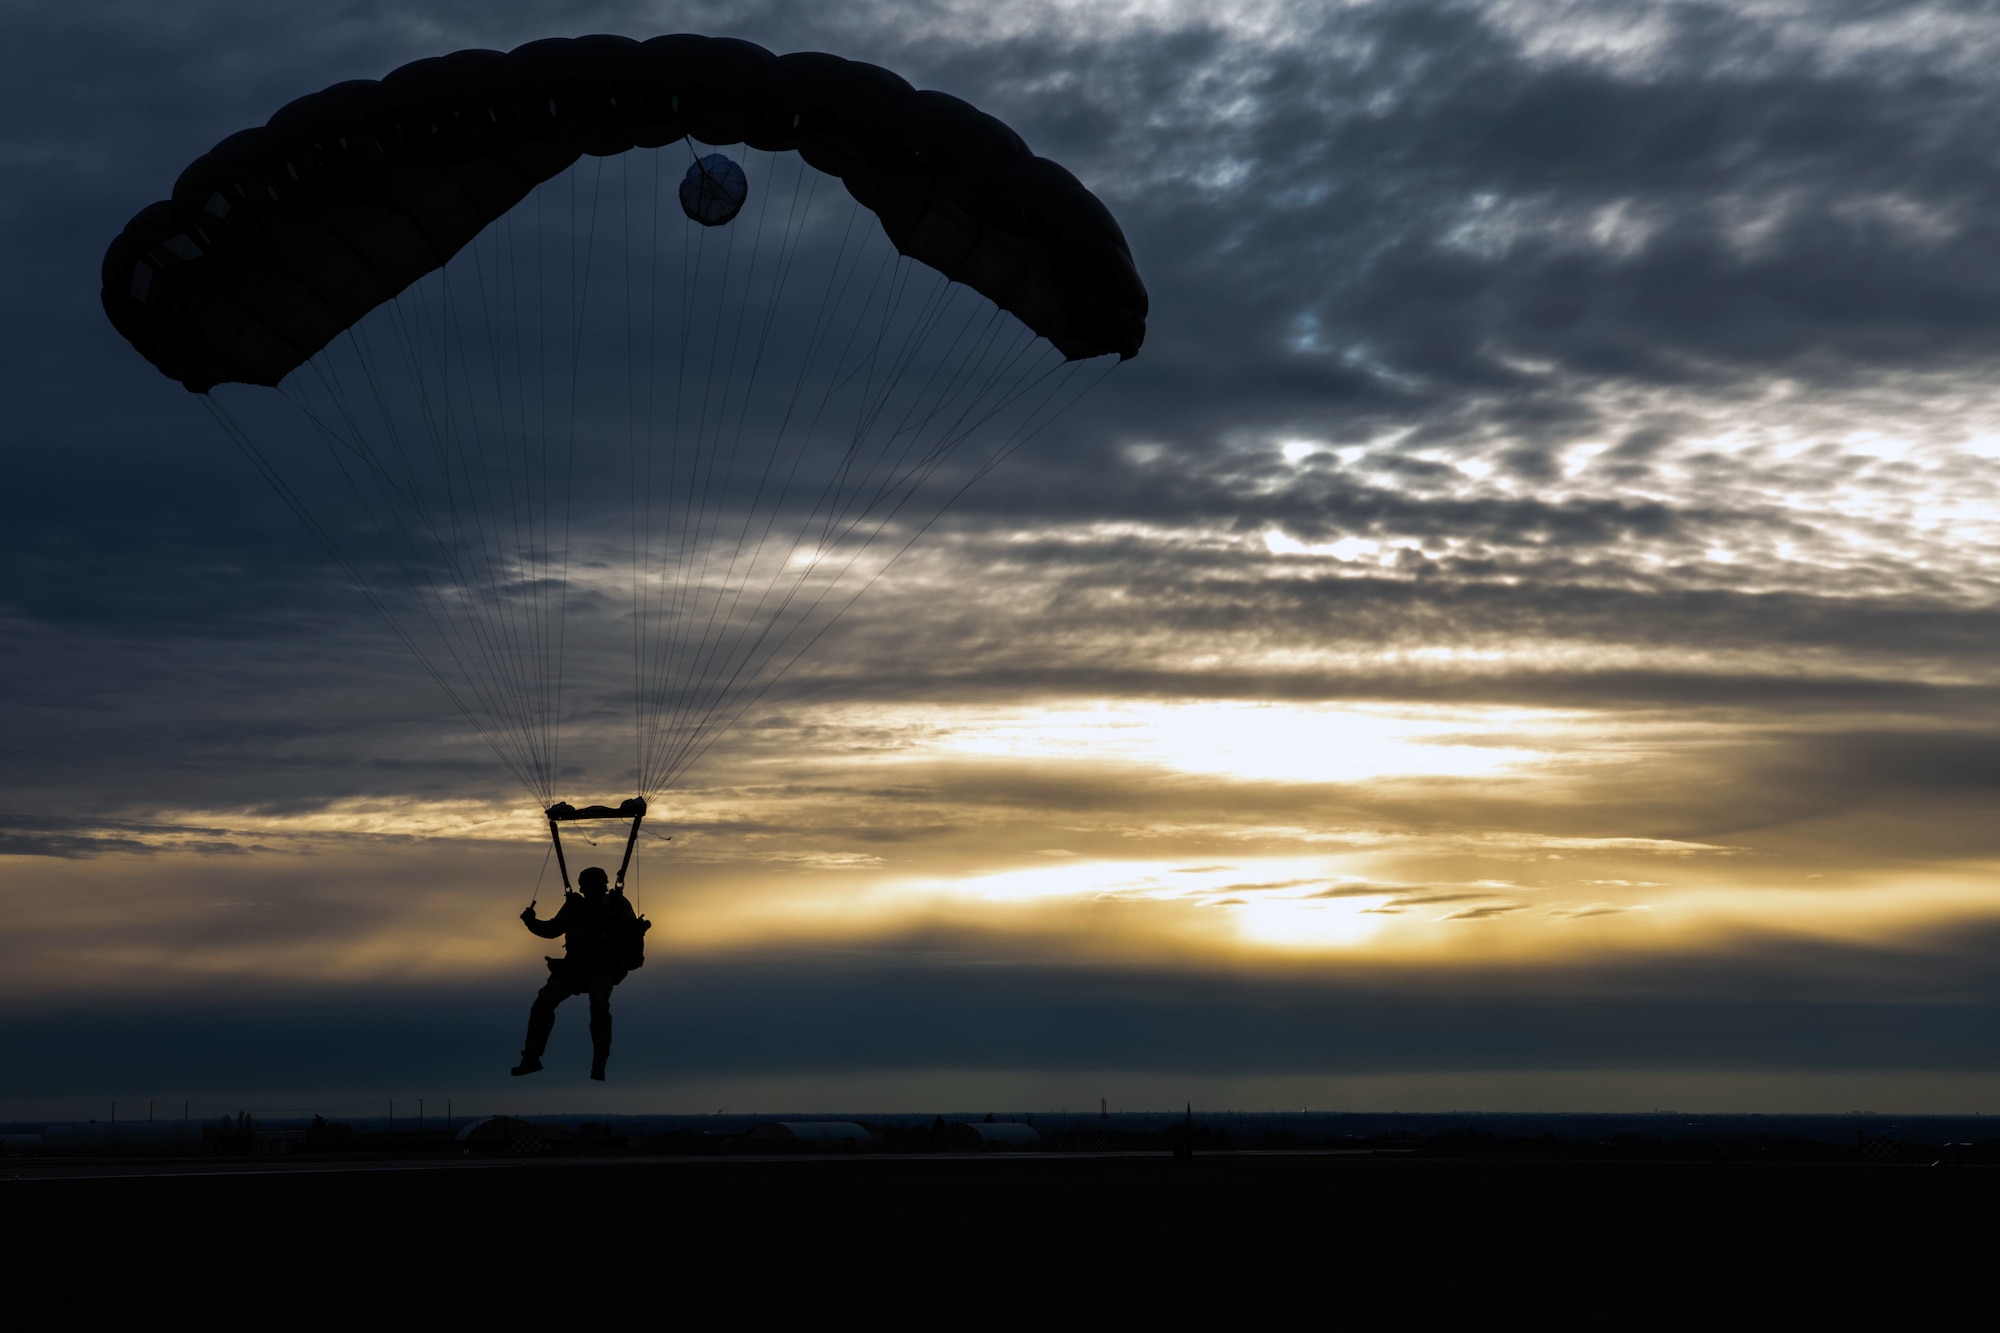 An Airman parachutes to the ground